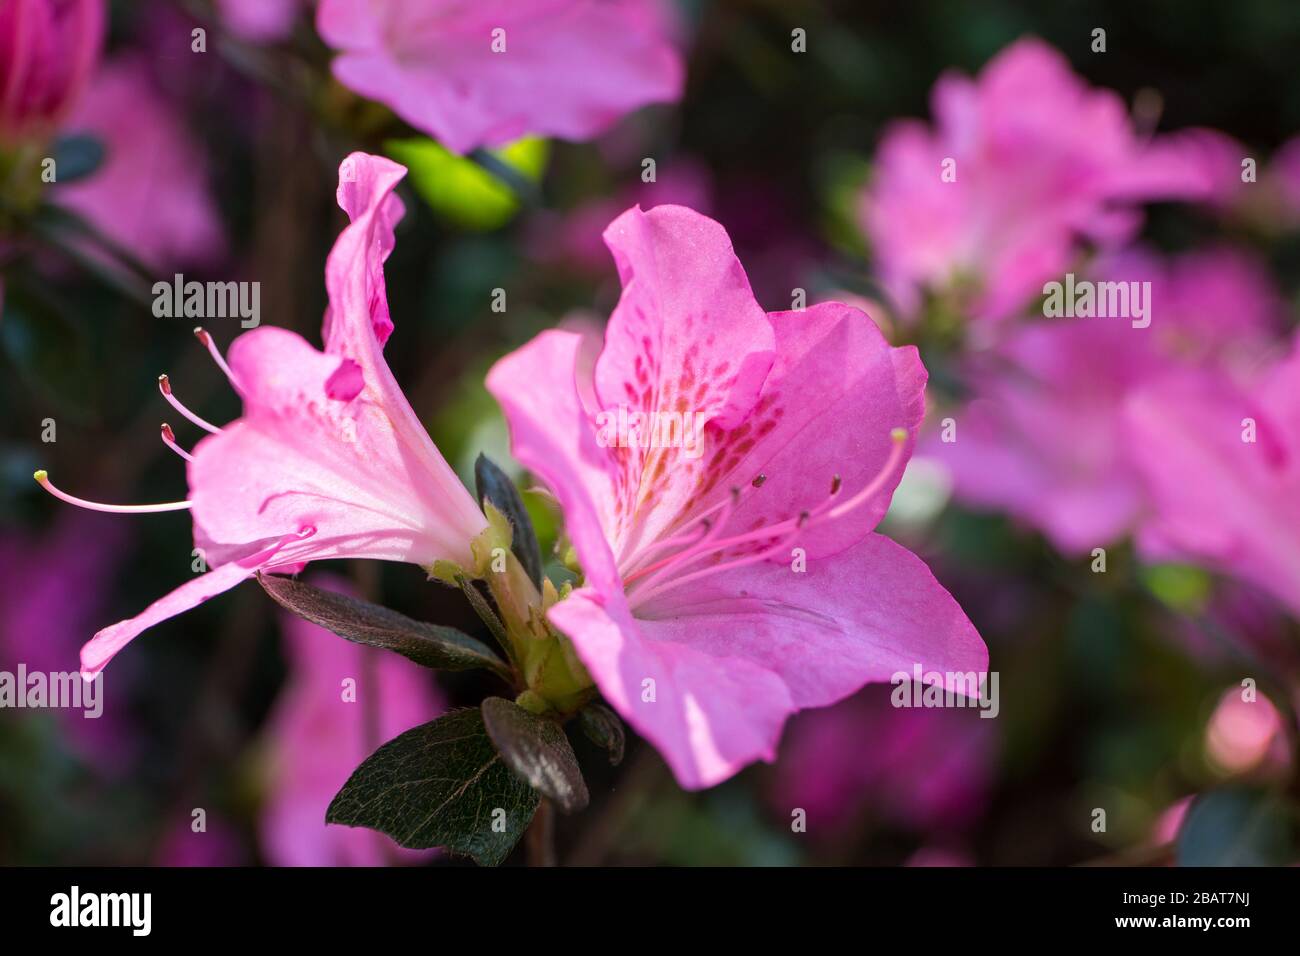 Closeup of pink azalea flowers in dappled sunlight Stock Photo